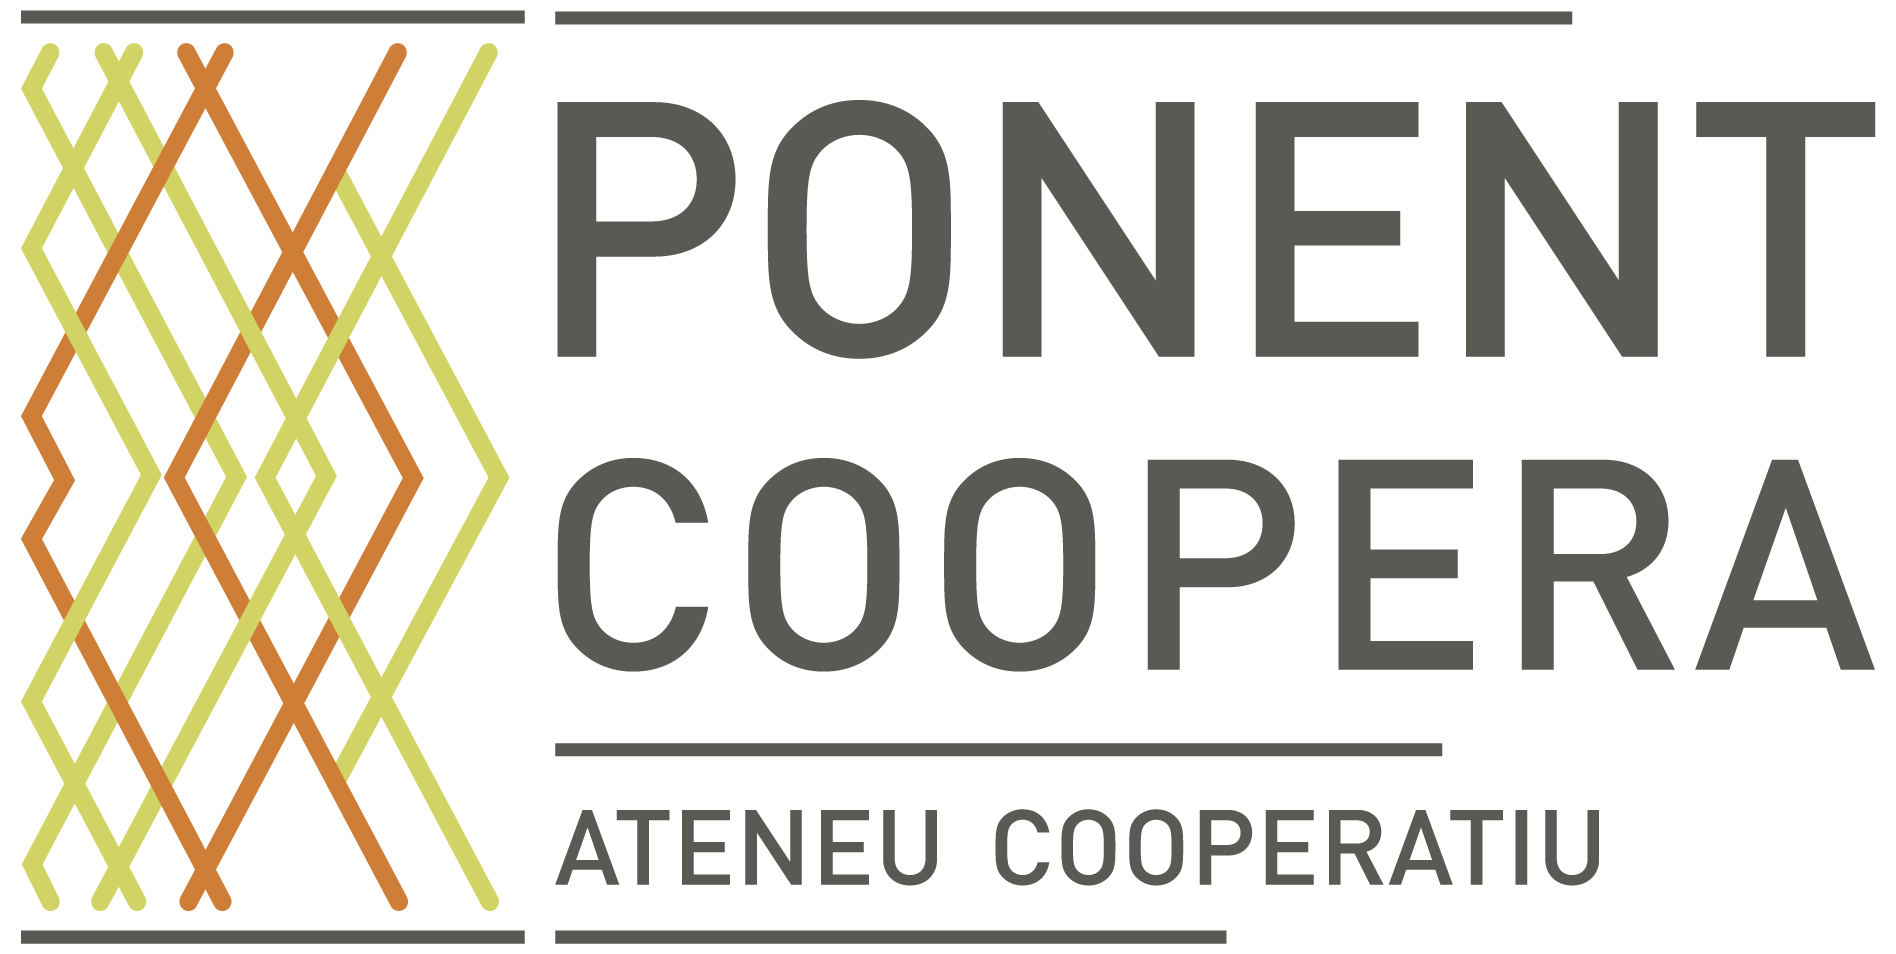 Ponent Coopera